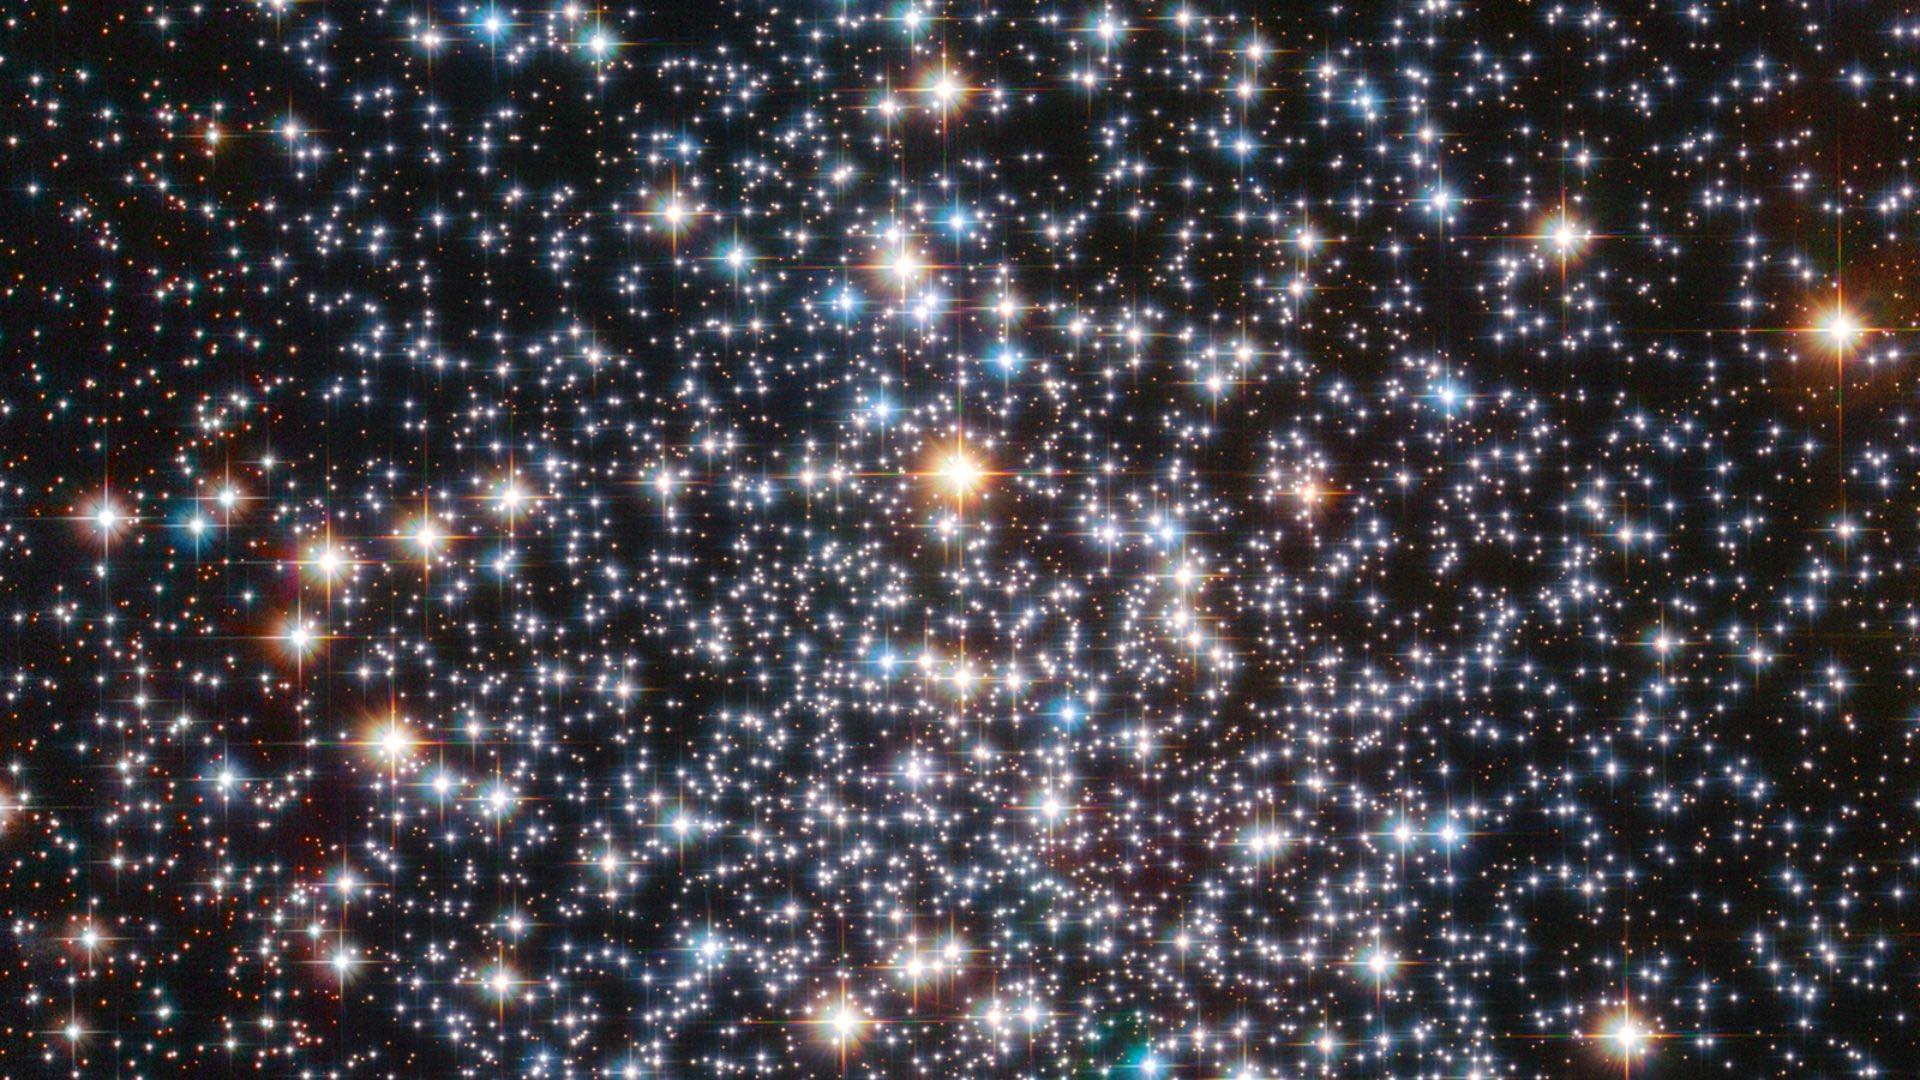 Credit: ESA Hubble, NASA